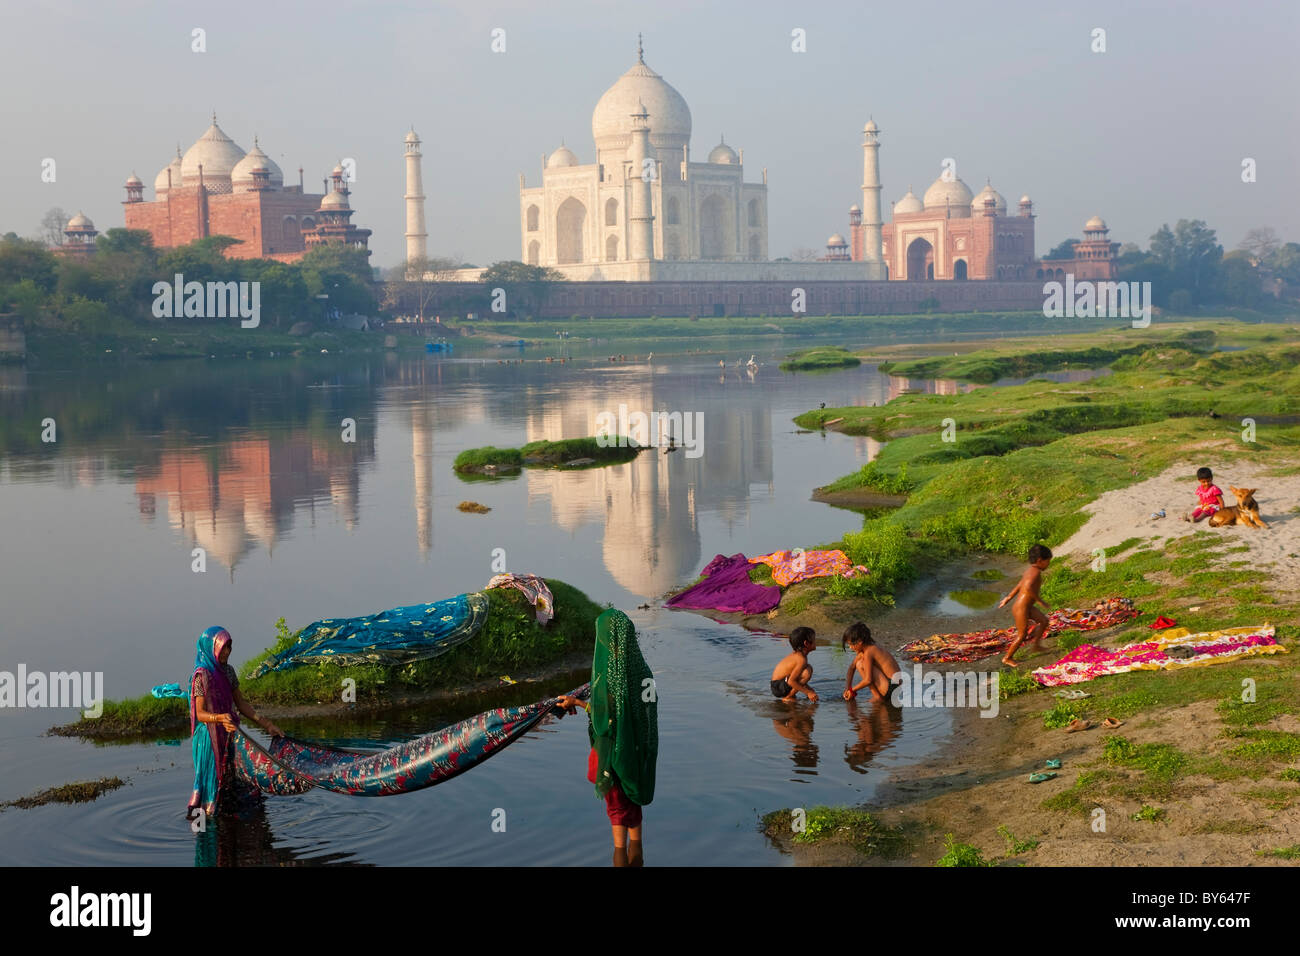 Waschen & Taj Mahal am Ufer des Flusses Yamuna, Agra, Indien Stockfoto